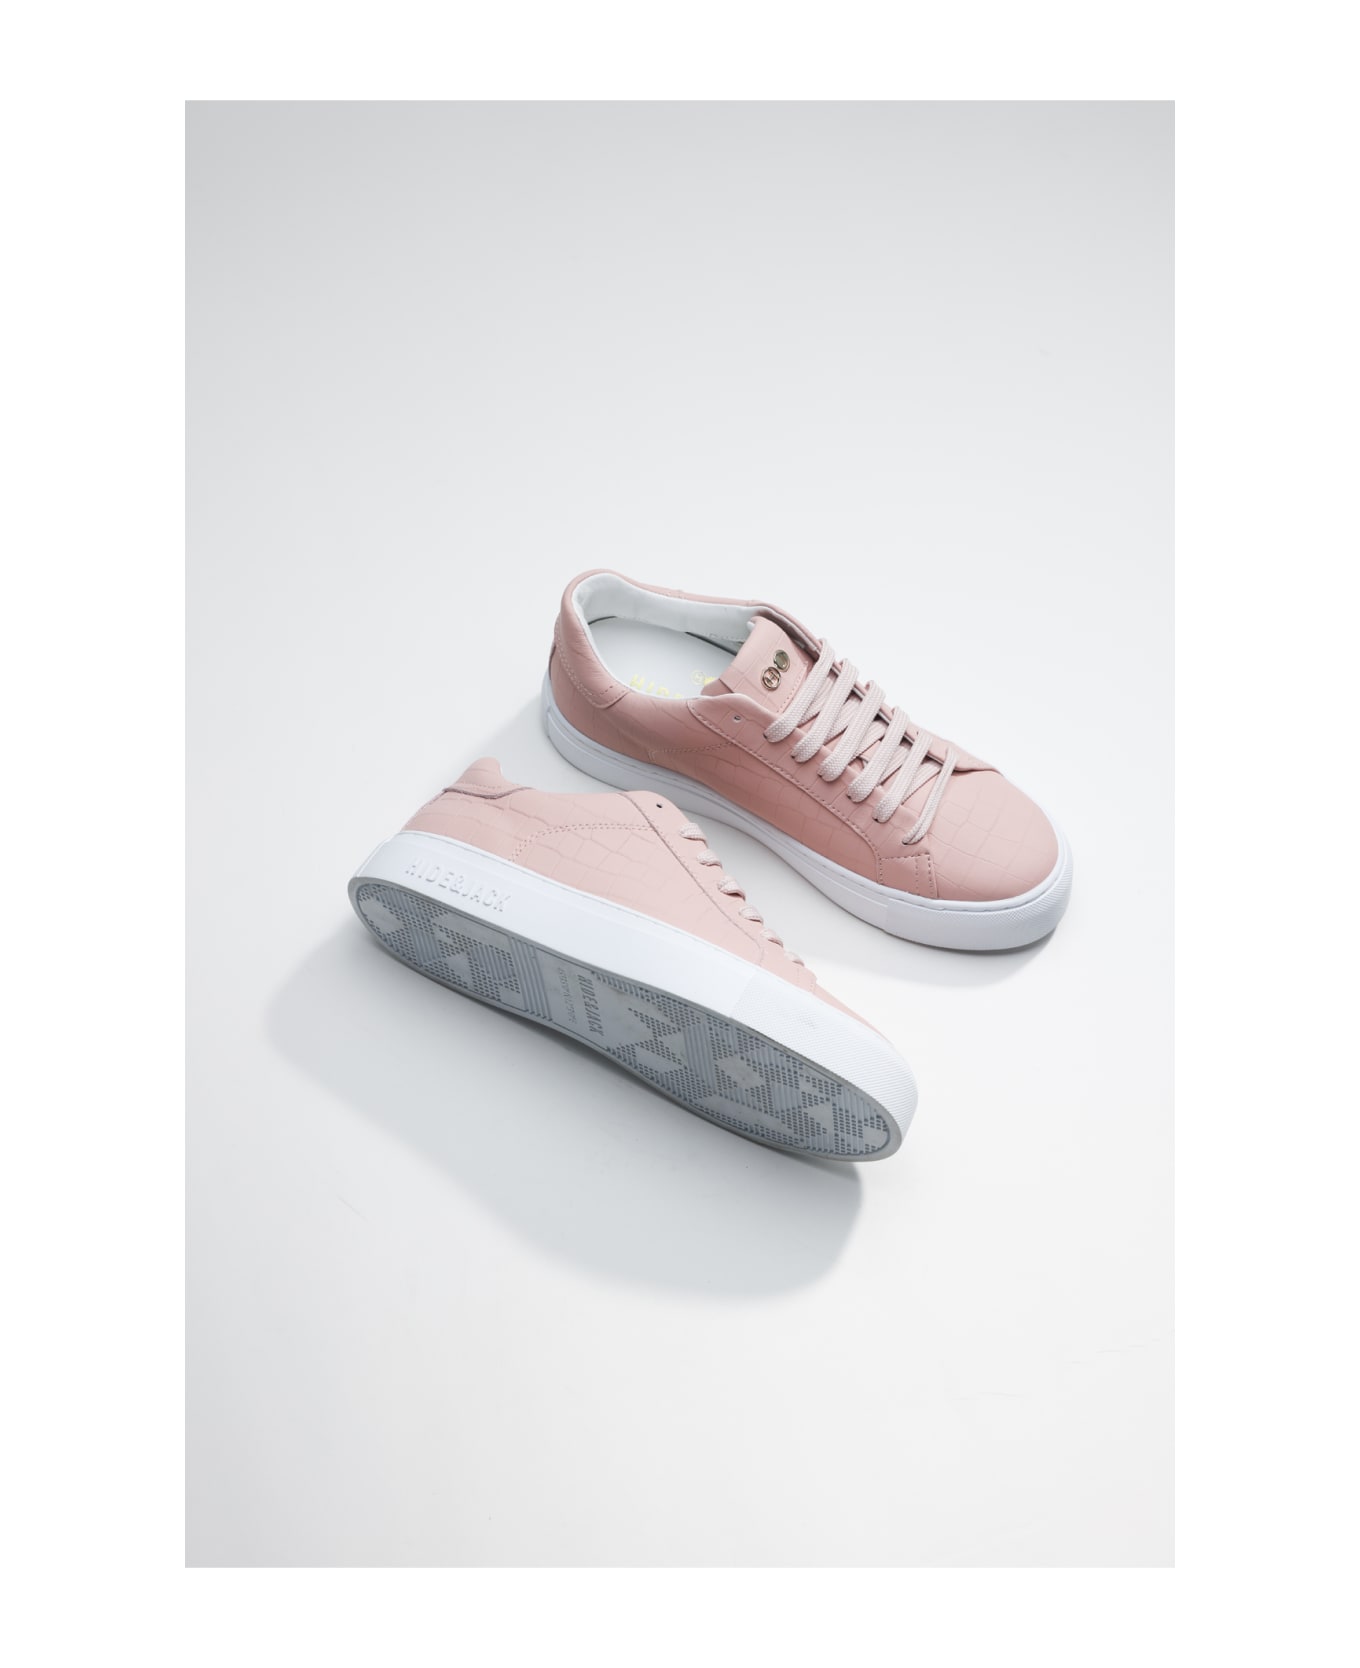 Hide&Jack Low Top Sneaker - Essence Pink White スニーカー